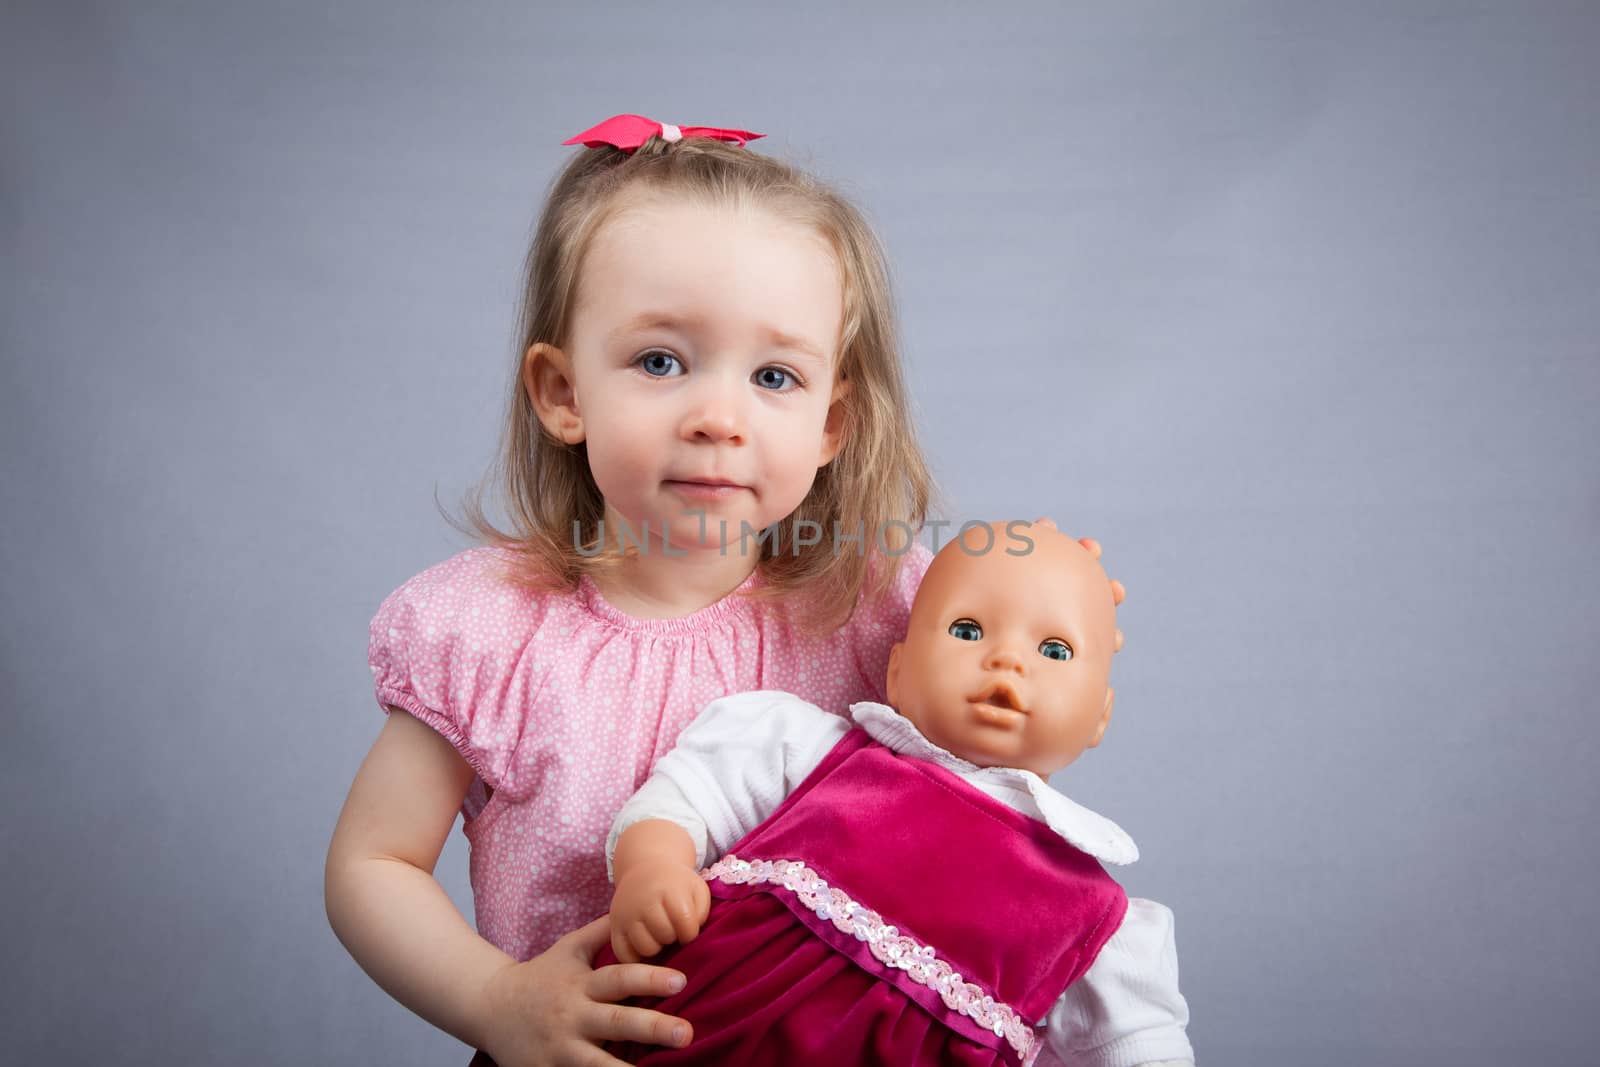 Girl with doll by leorantala